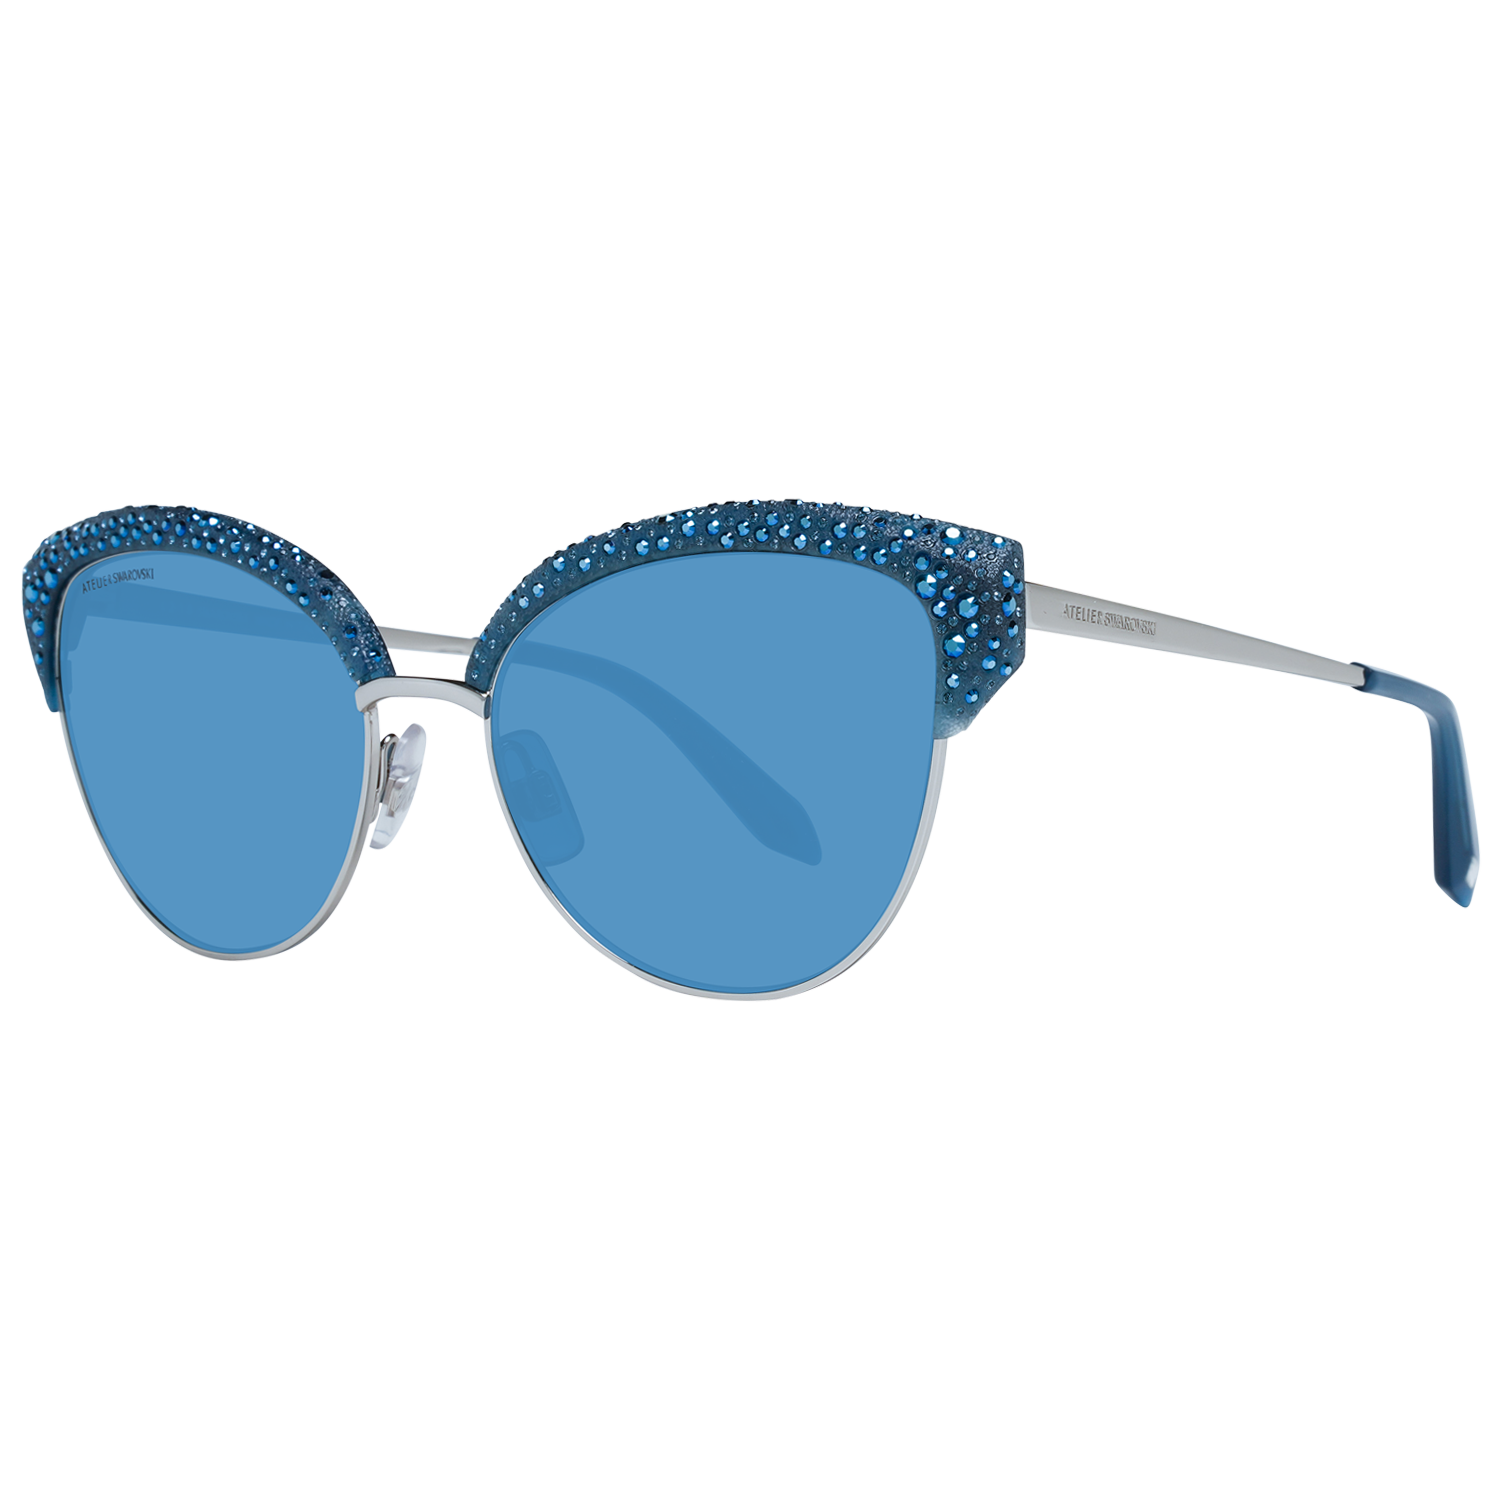 Atelier Swarovski Sunglasses Atelier Swarovski Sunglasses SK0164-P 90X Eyeglasses Eyewear UK USA Australia 